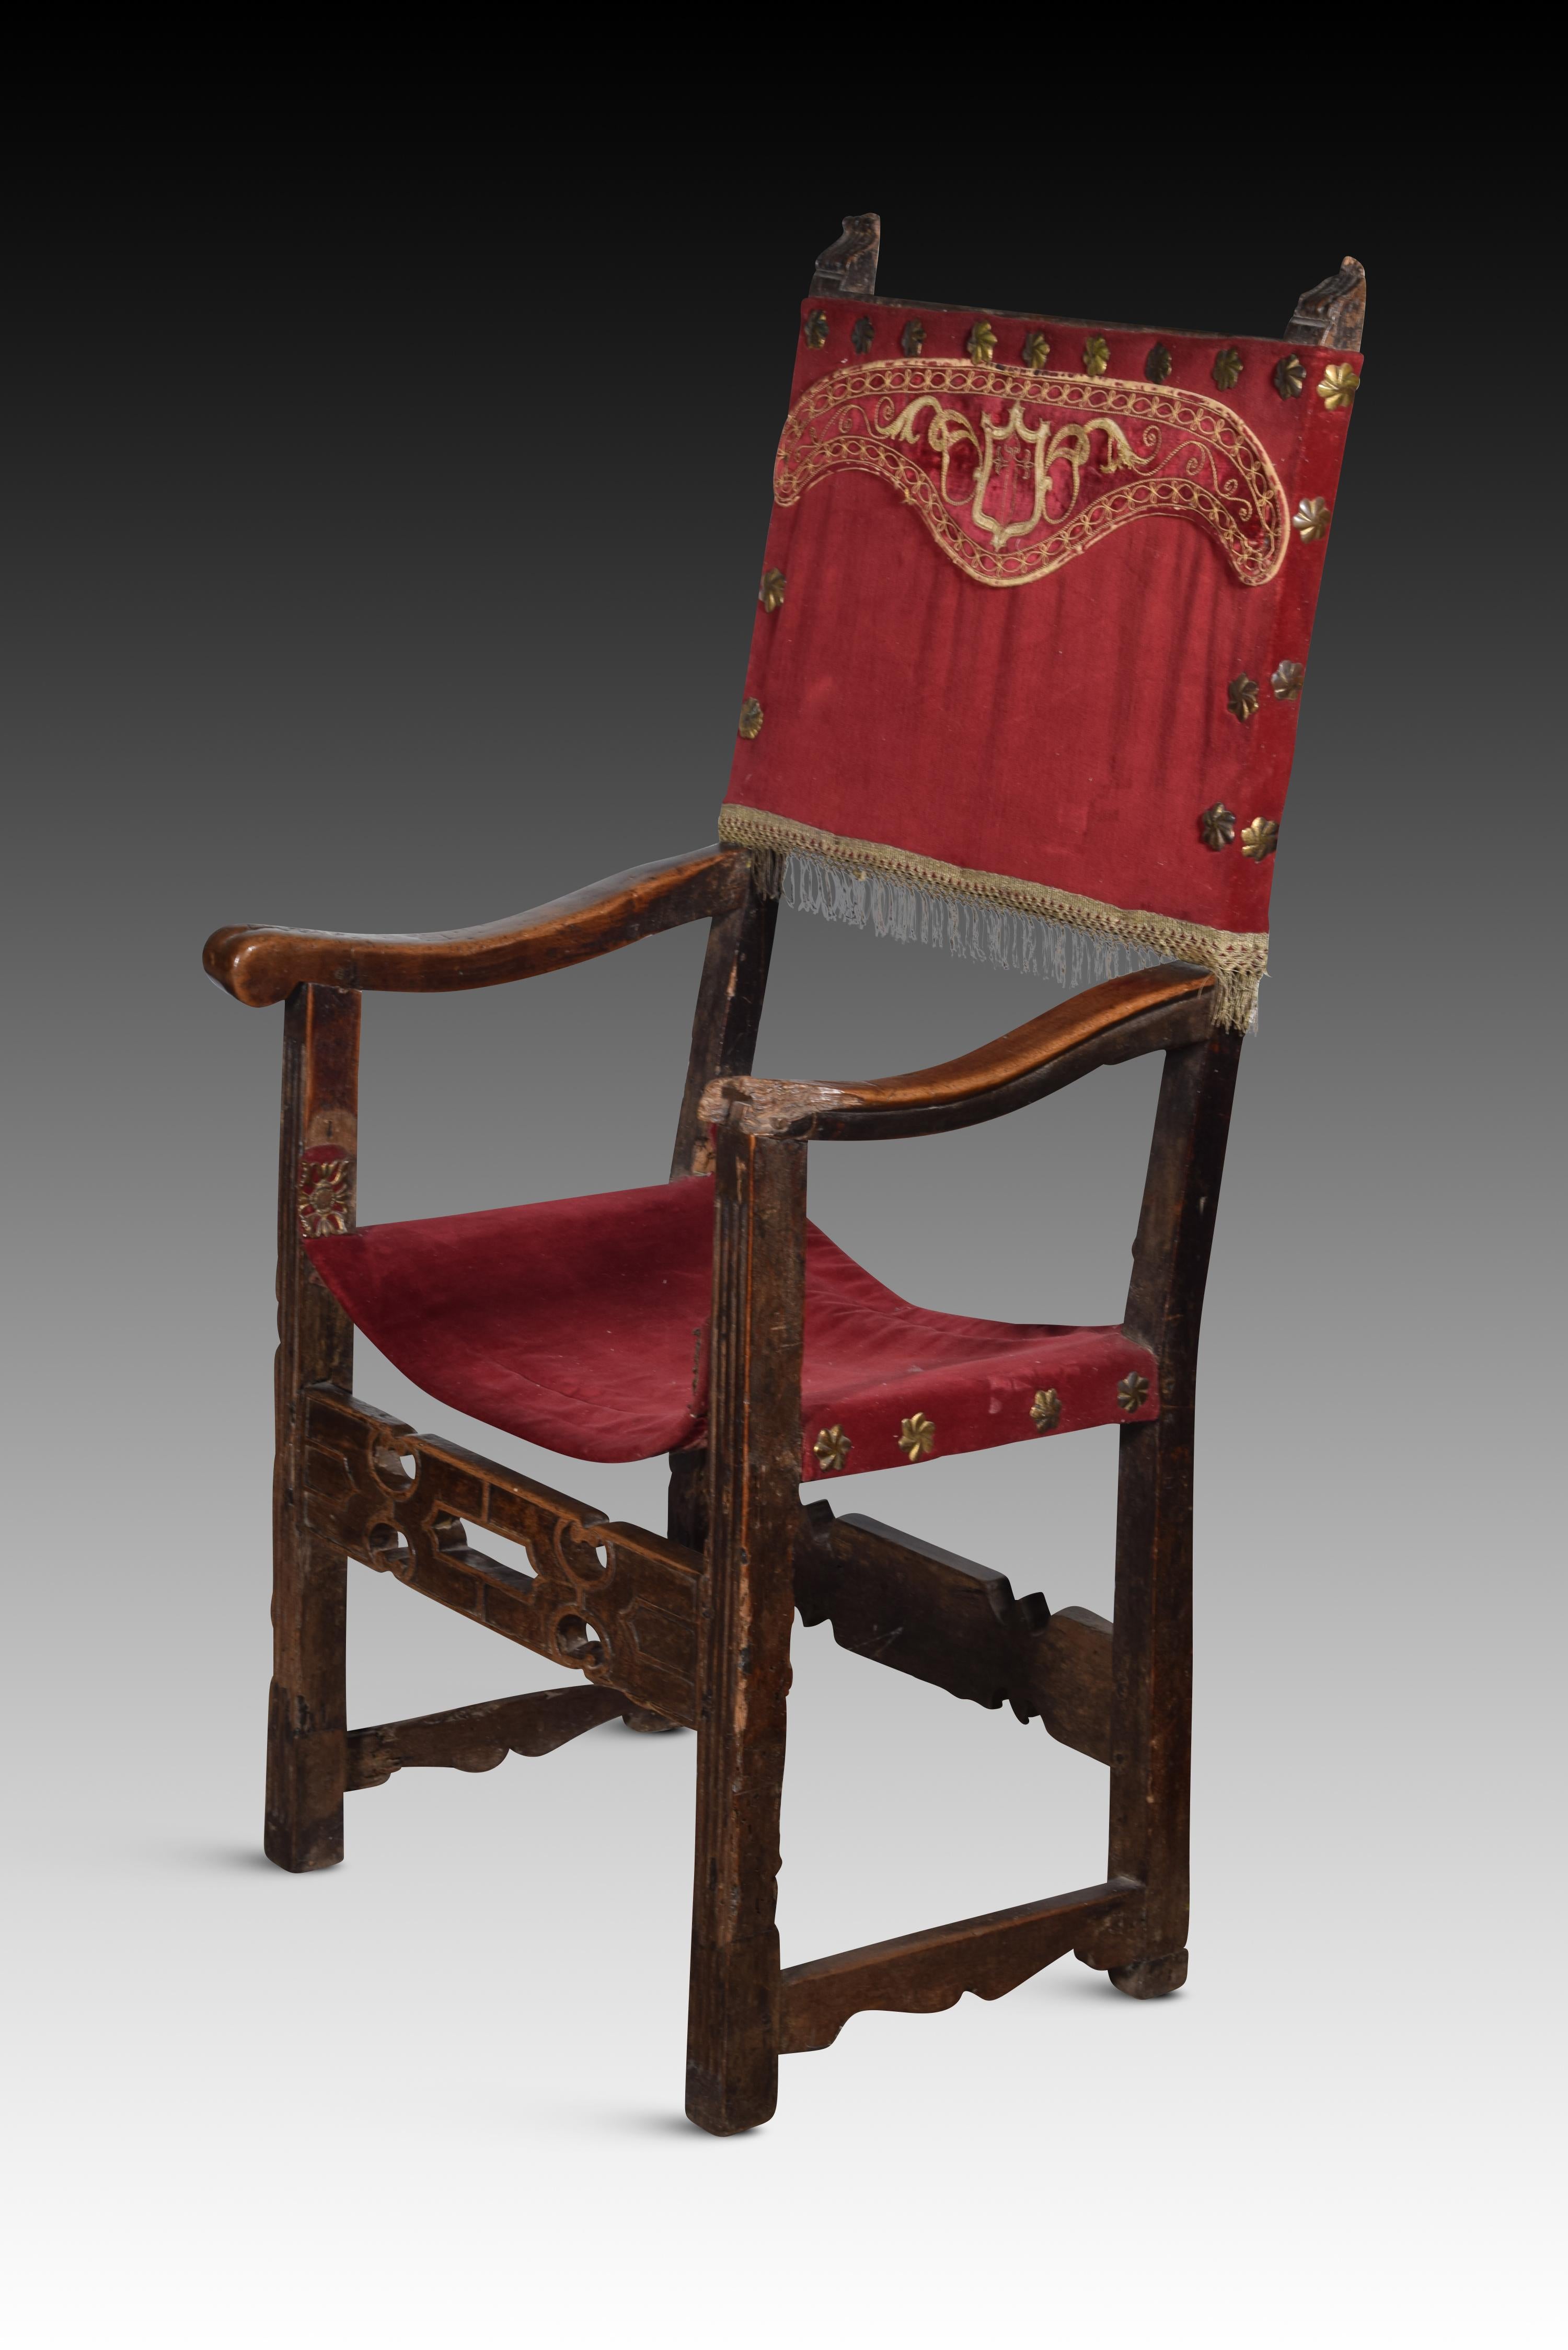 16th century chairs